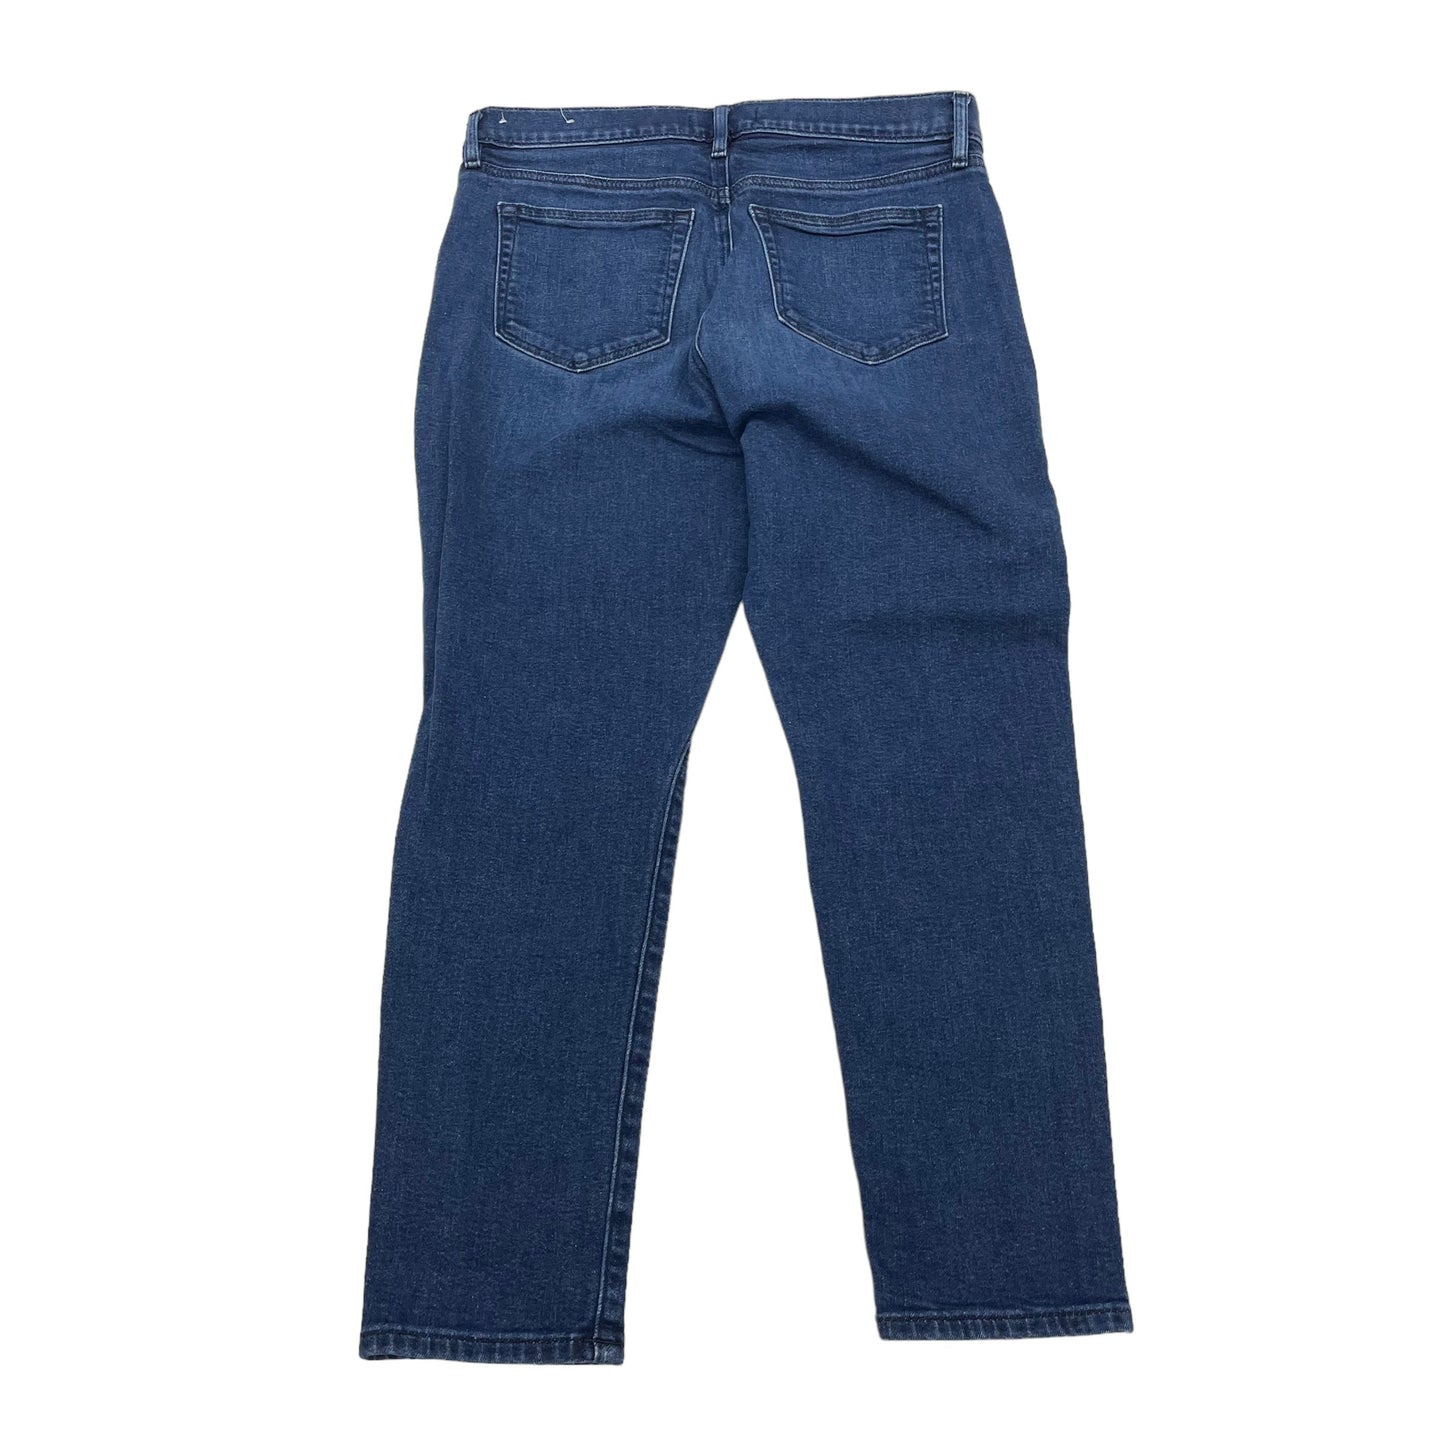 Jeans Skinny By Loft  Size: 10